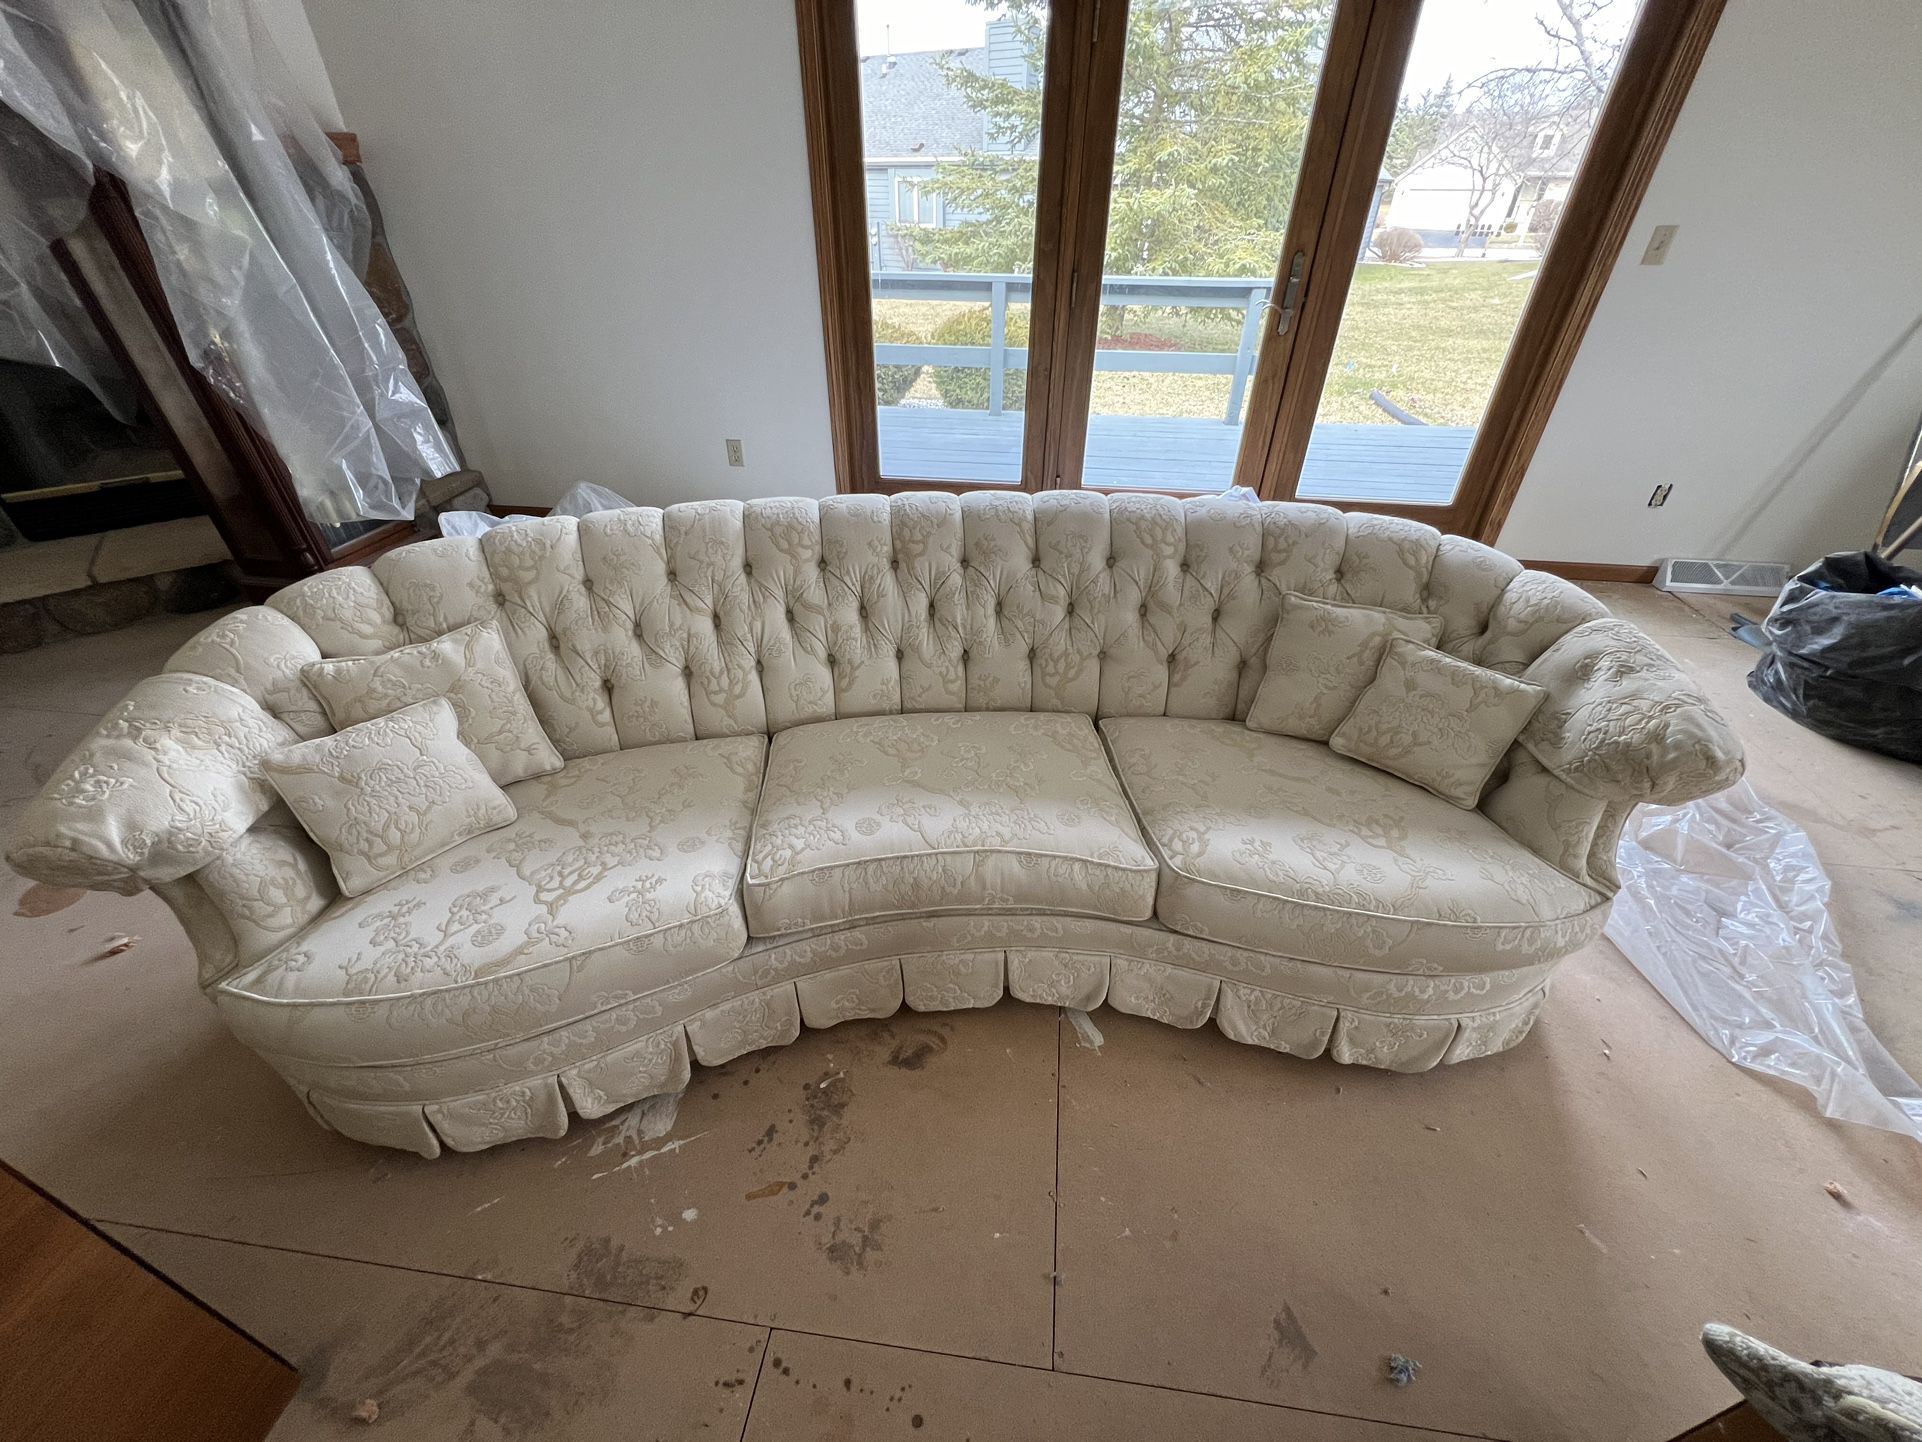 Brocade Sofa